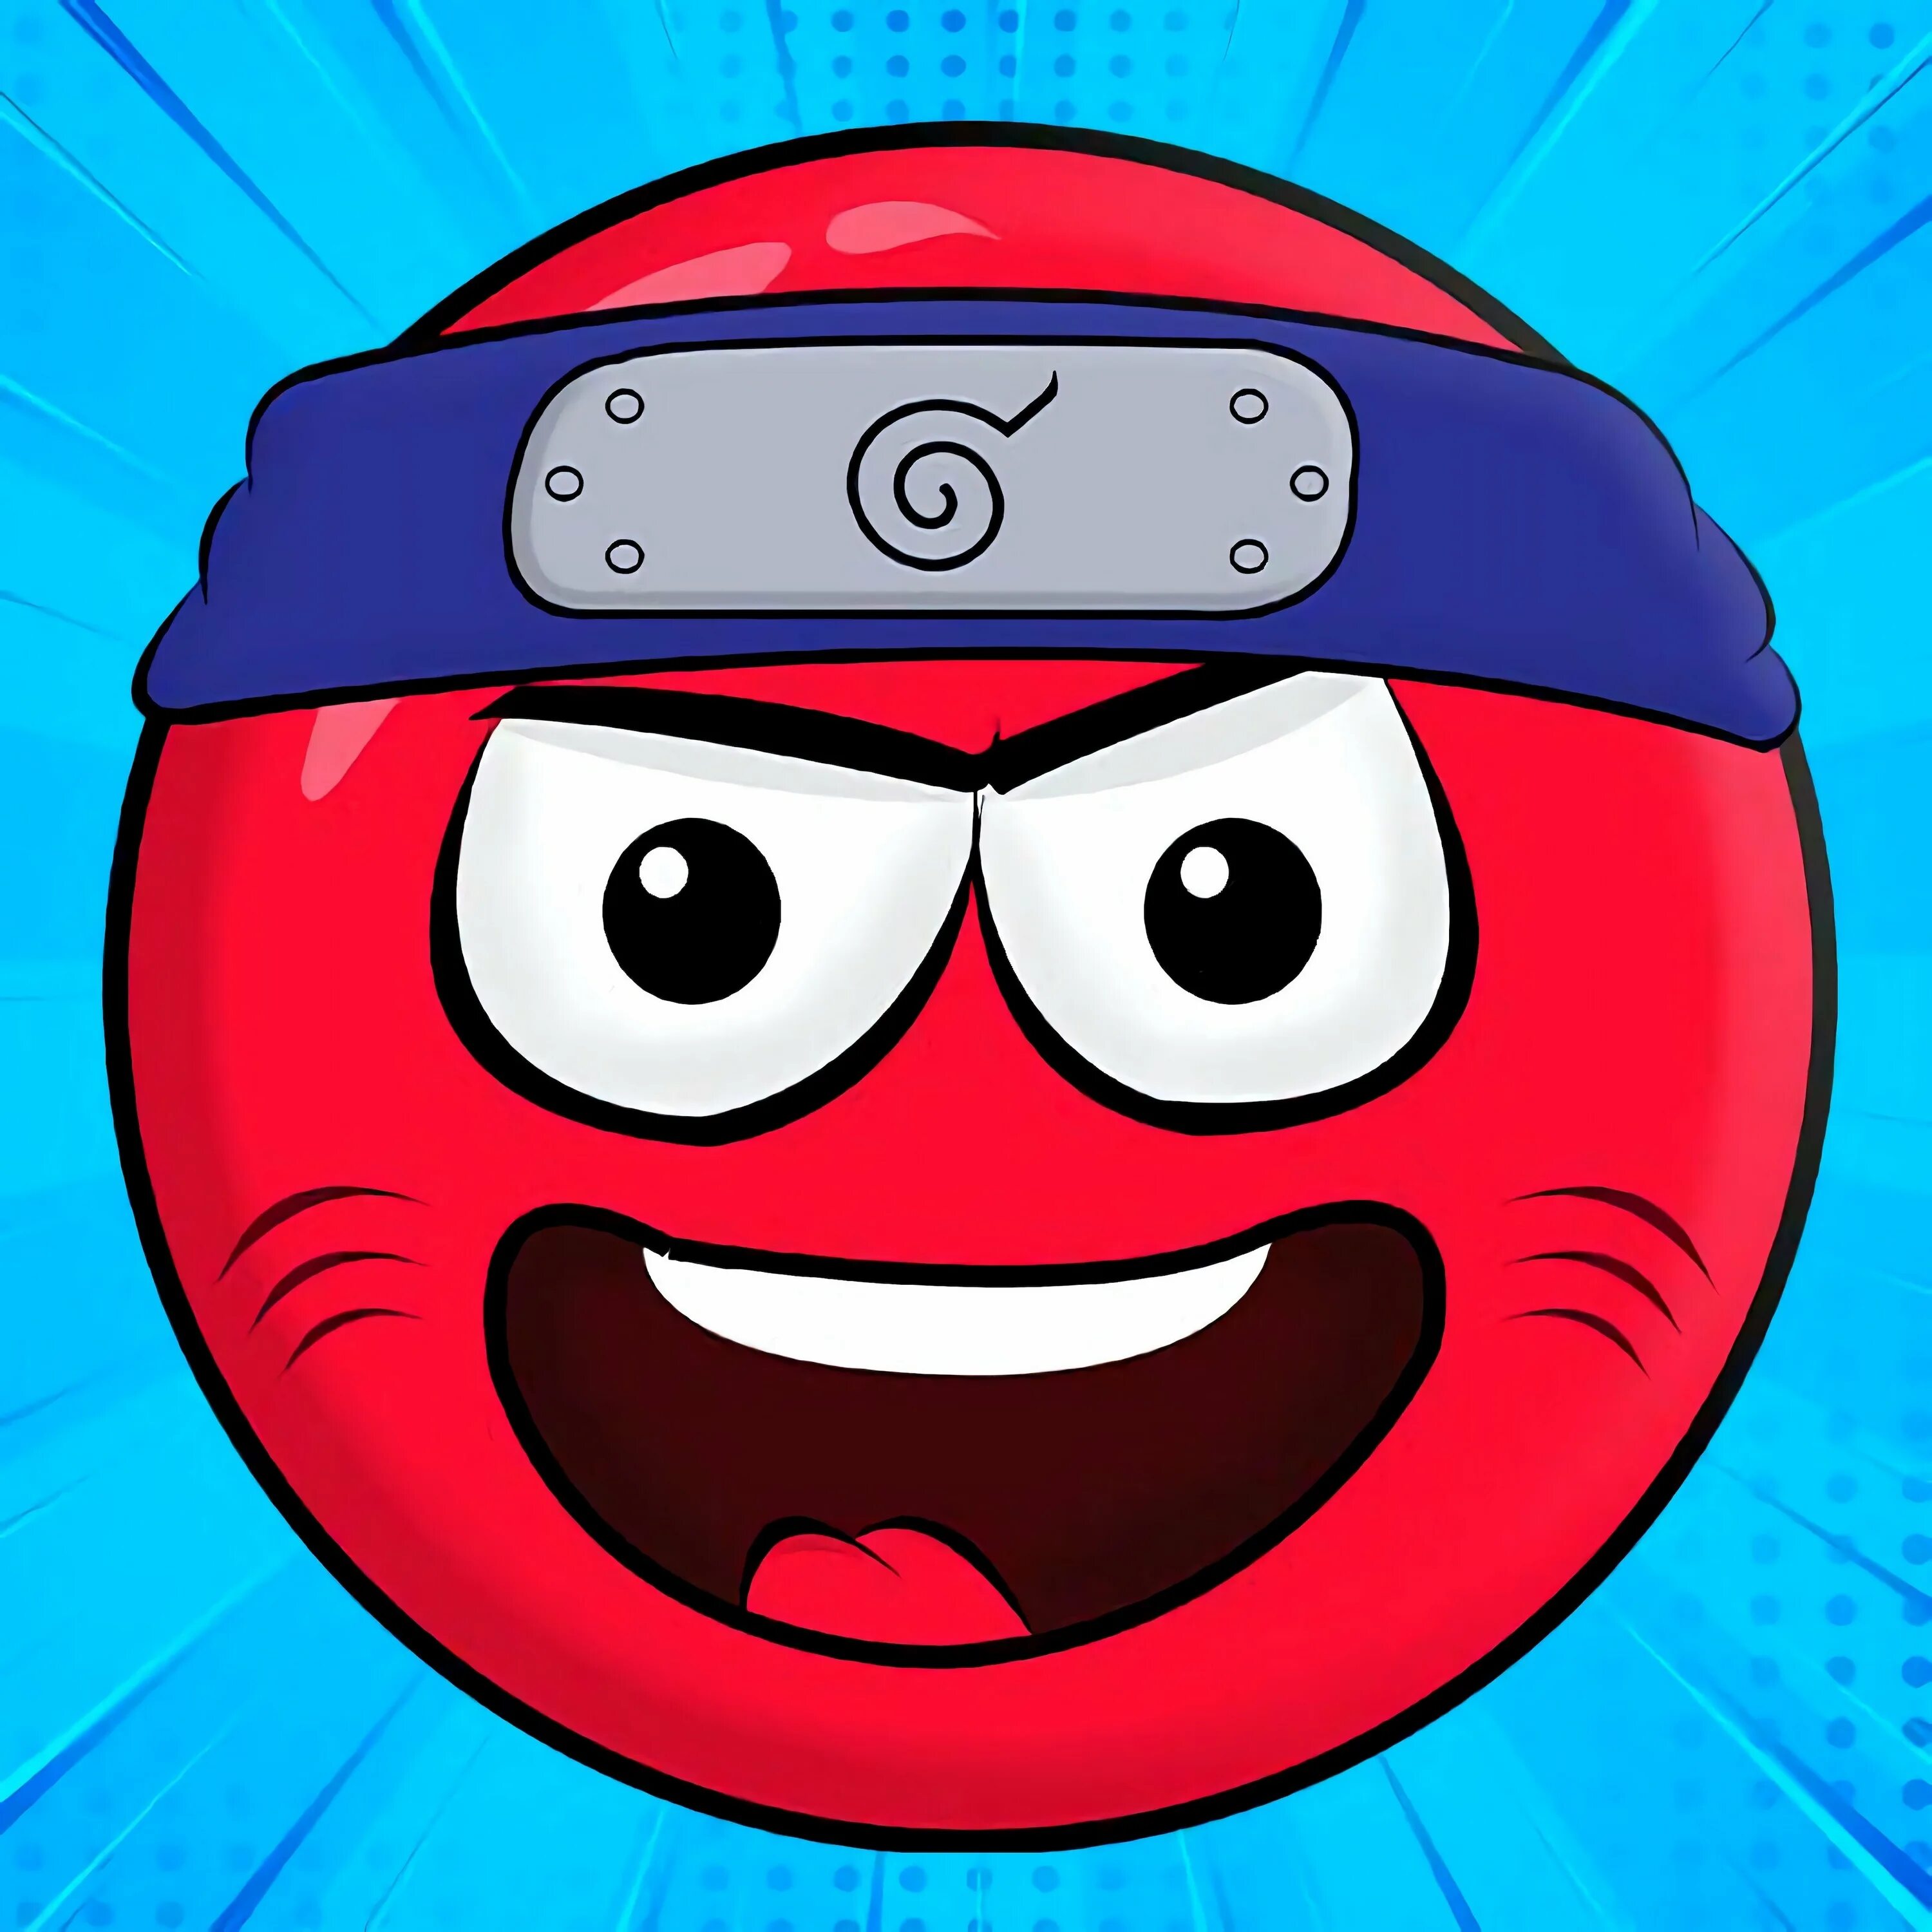 Игра Red Ball 4. Красный шар ред бол 4. Red Ball Adventure игра. Ball Hero Adventure: Red Bounce Ball. Включи red ball красный